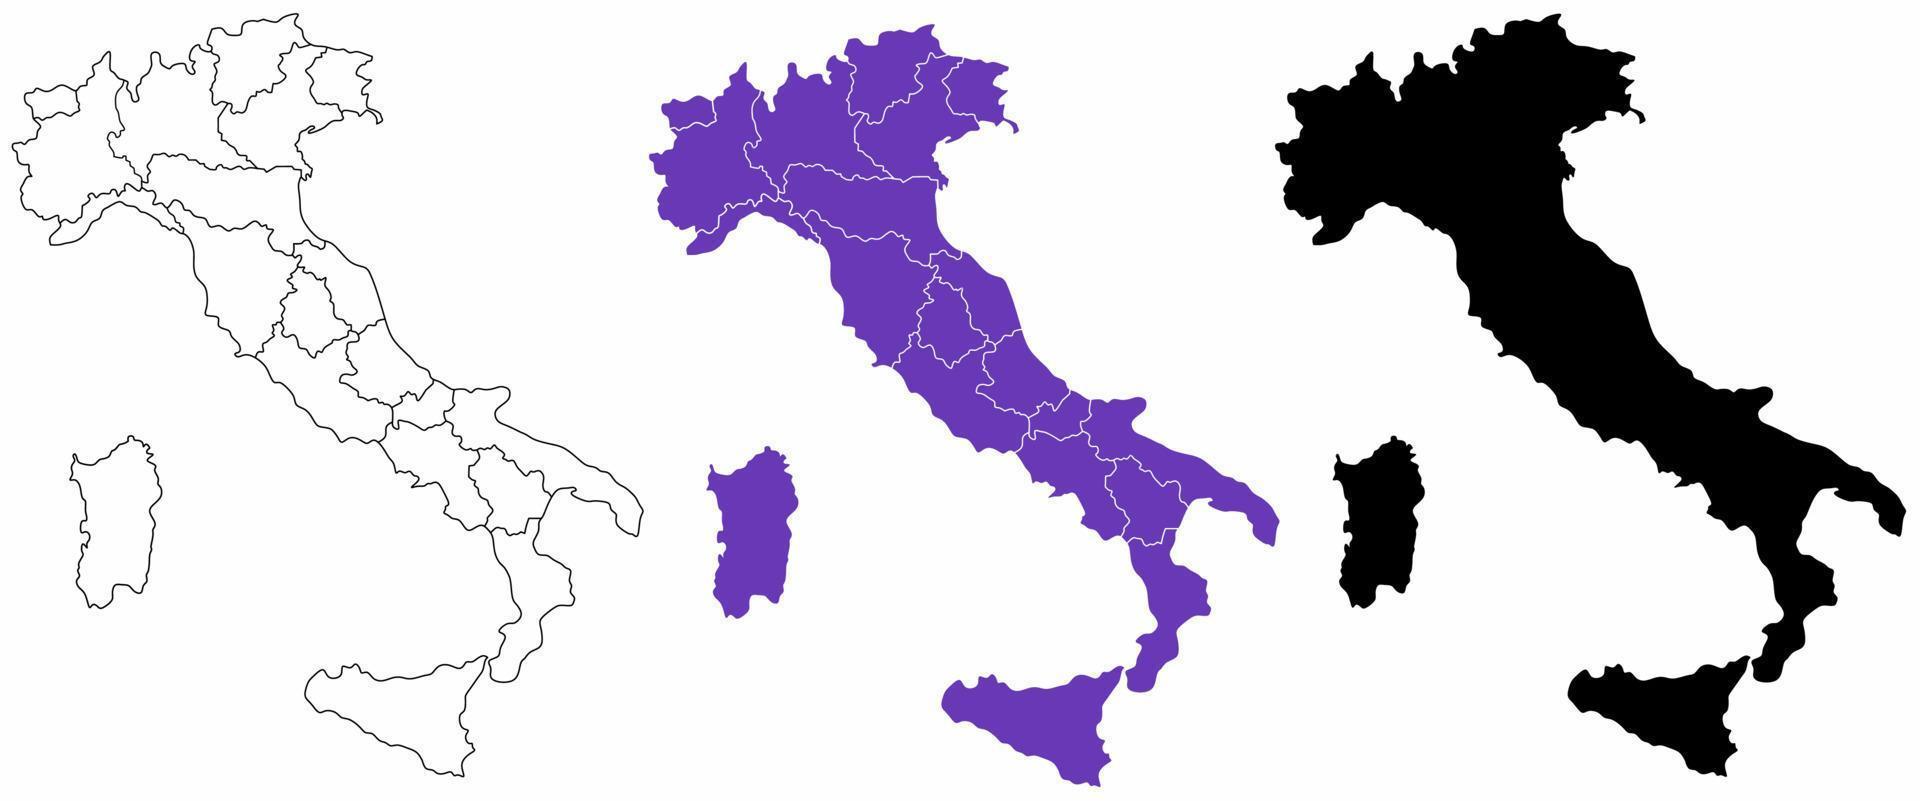 mapa politico republica de italia vector